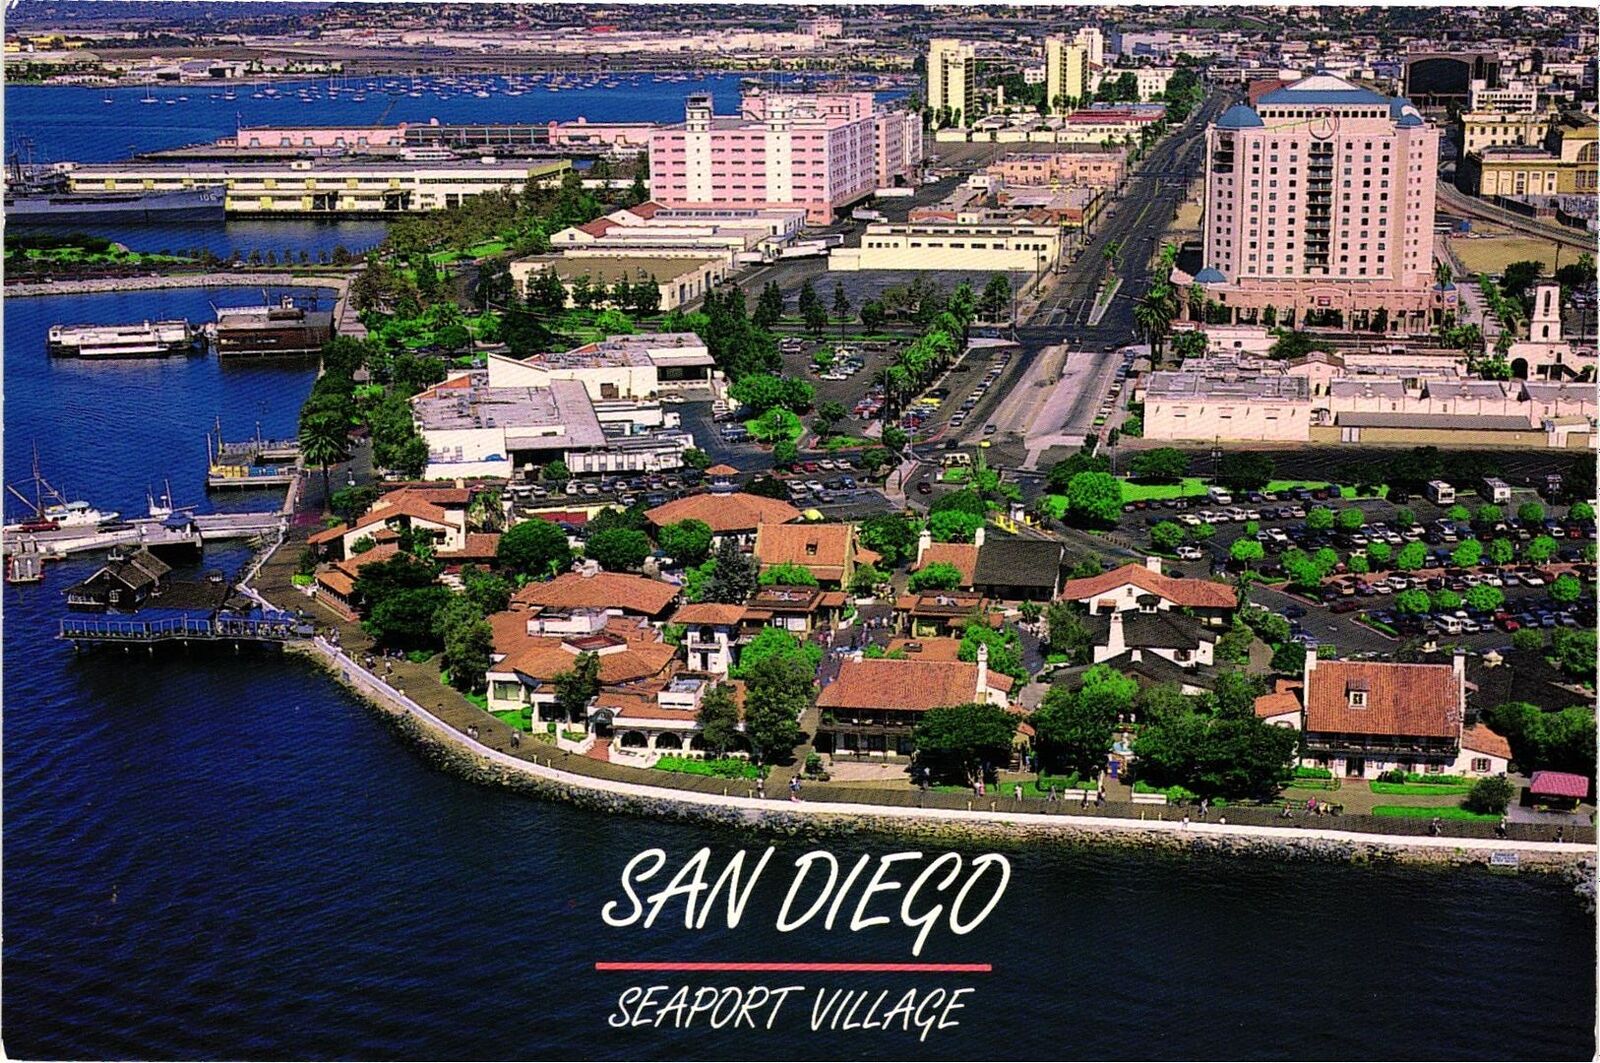 Vintage Postcard 4x6- SEAPORT VILLAGE, SAN DIEGO, CA.